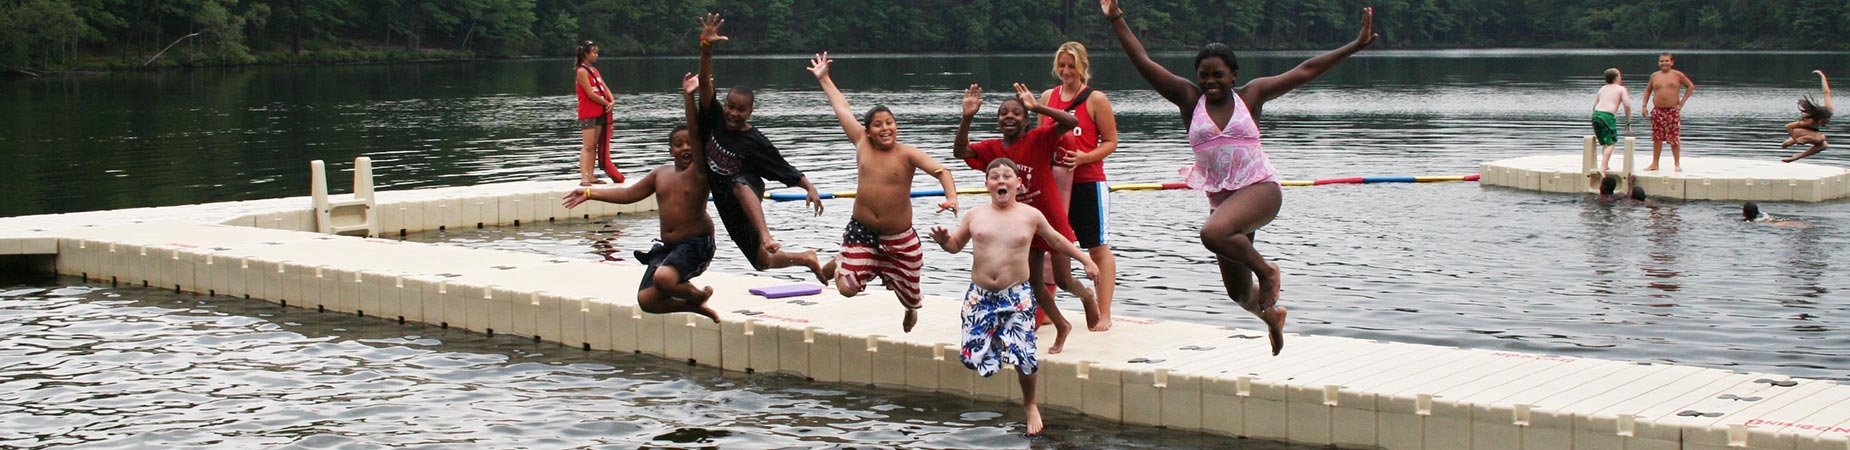 Kids jumping into water off of floating swim platform